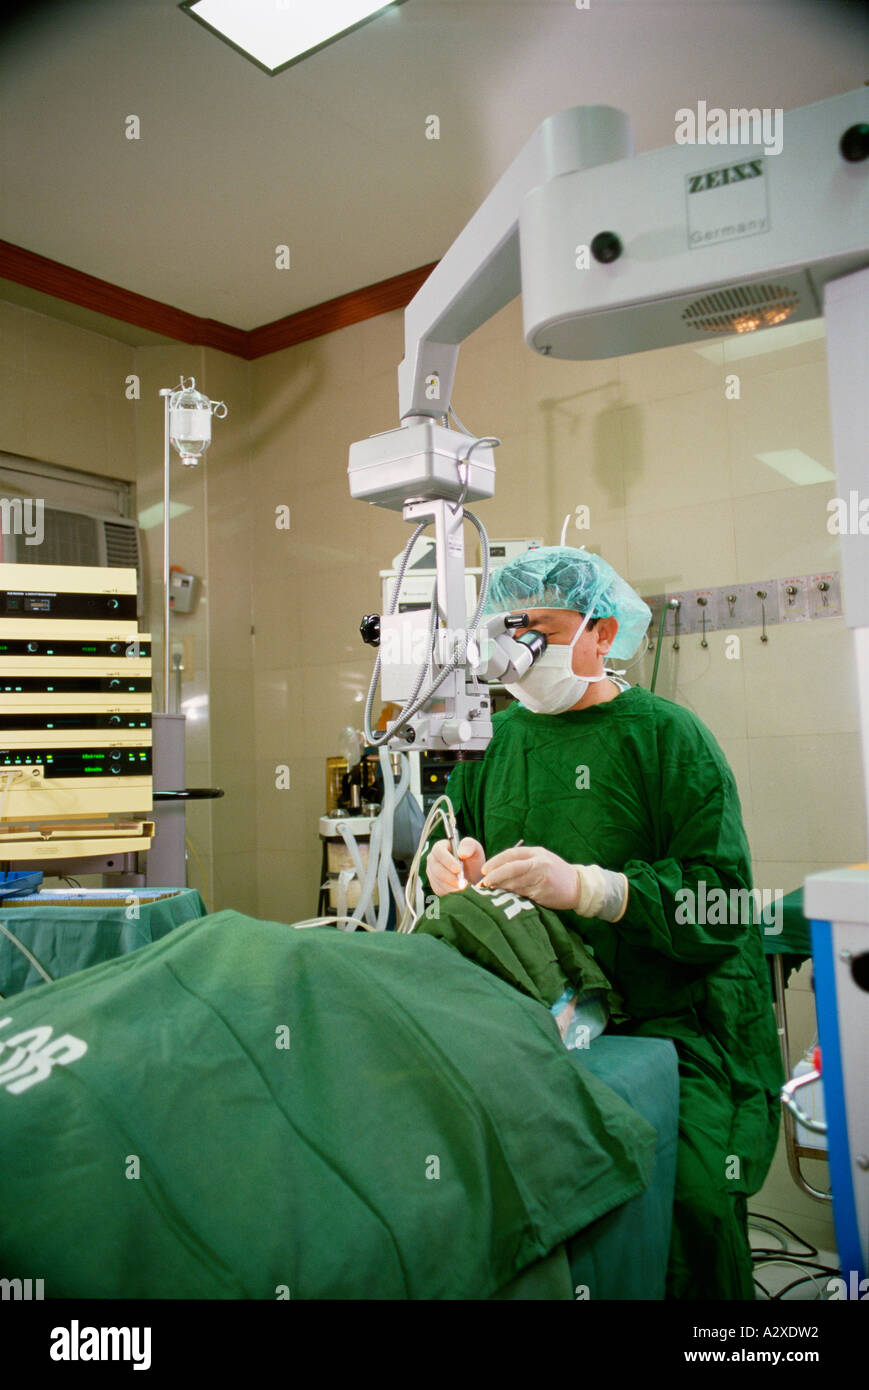 Medical Pharmaceutical Hospital Surgical procedure Eye surgery Stock Photo